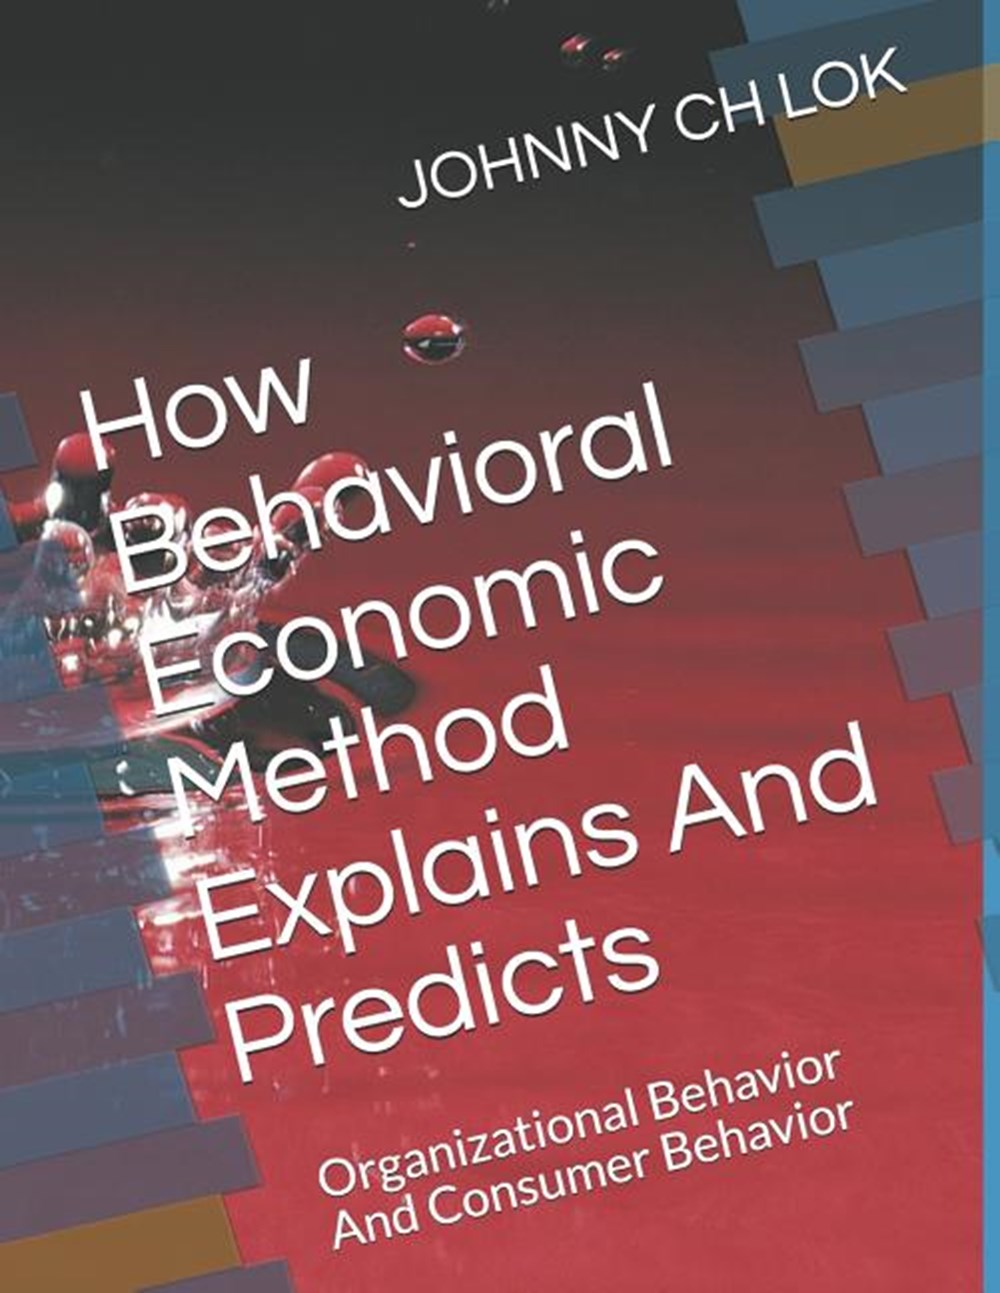 How Behavioral Economic Method Explains And Predicts Organizational Behavior And Consumer Behavior